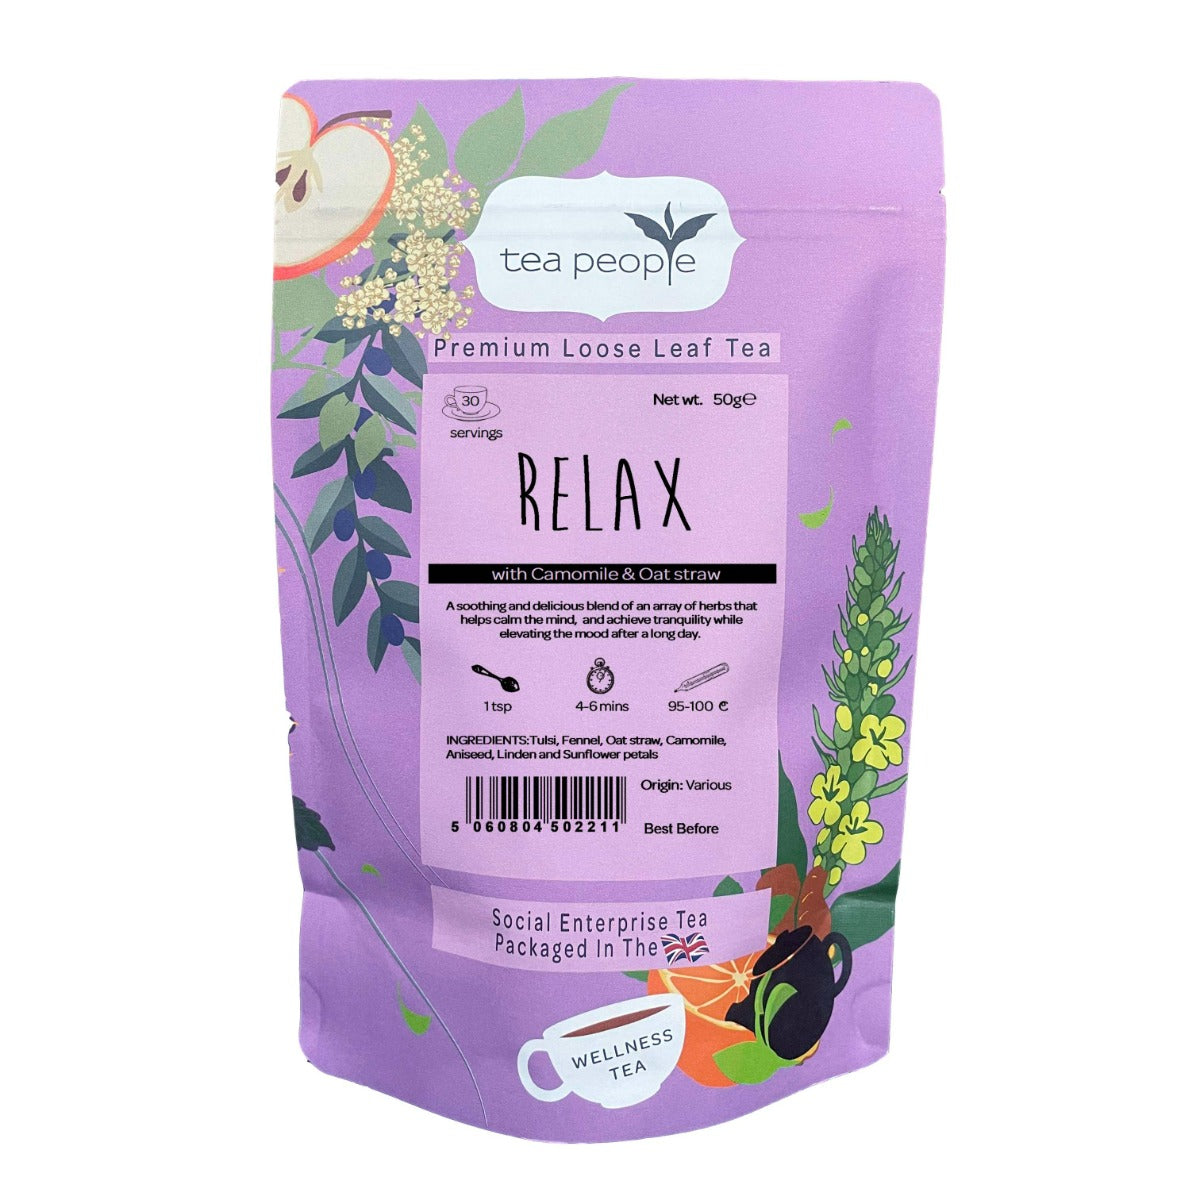 Relax - Loose Wellness Tea